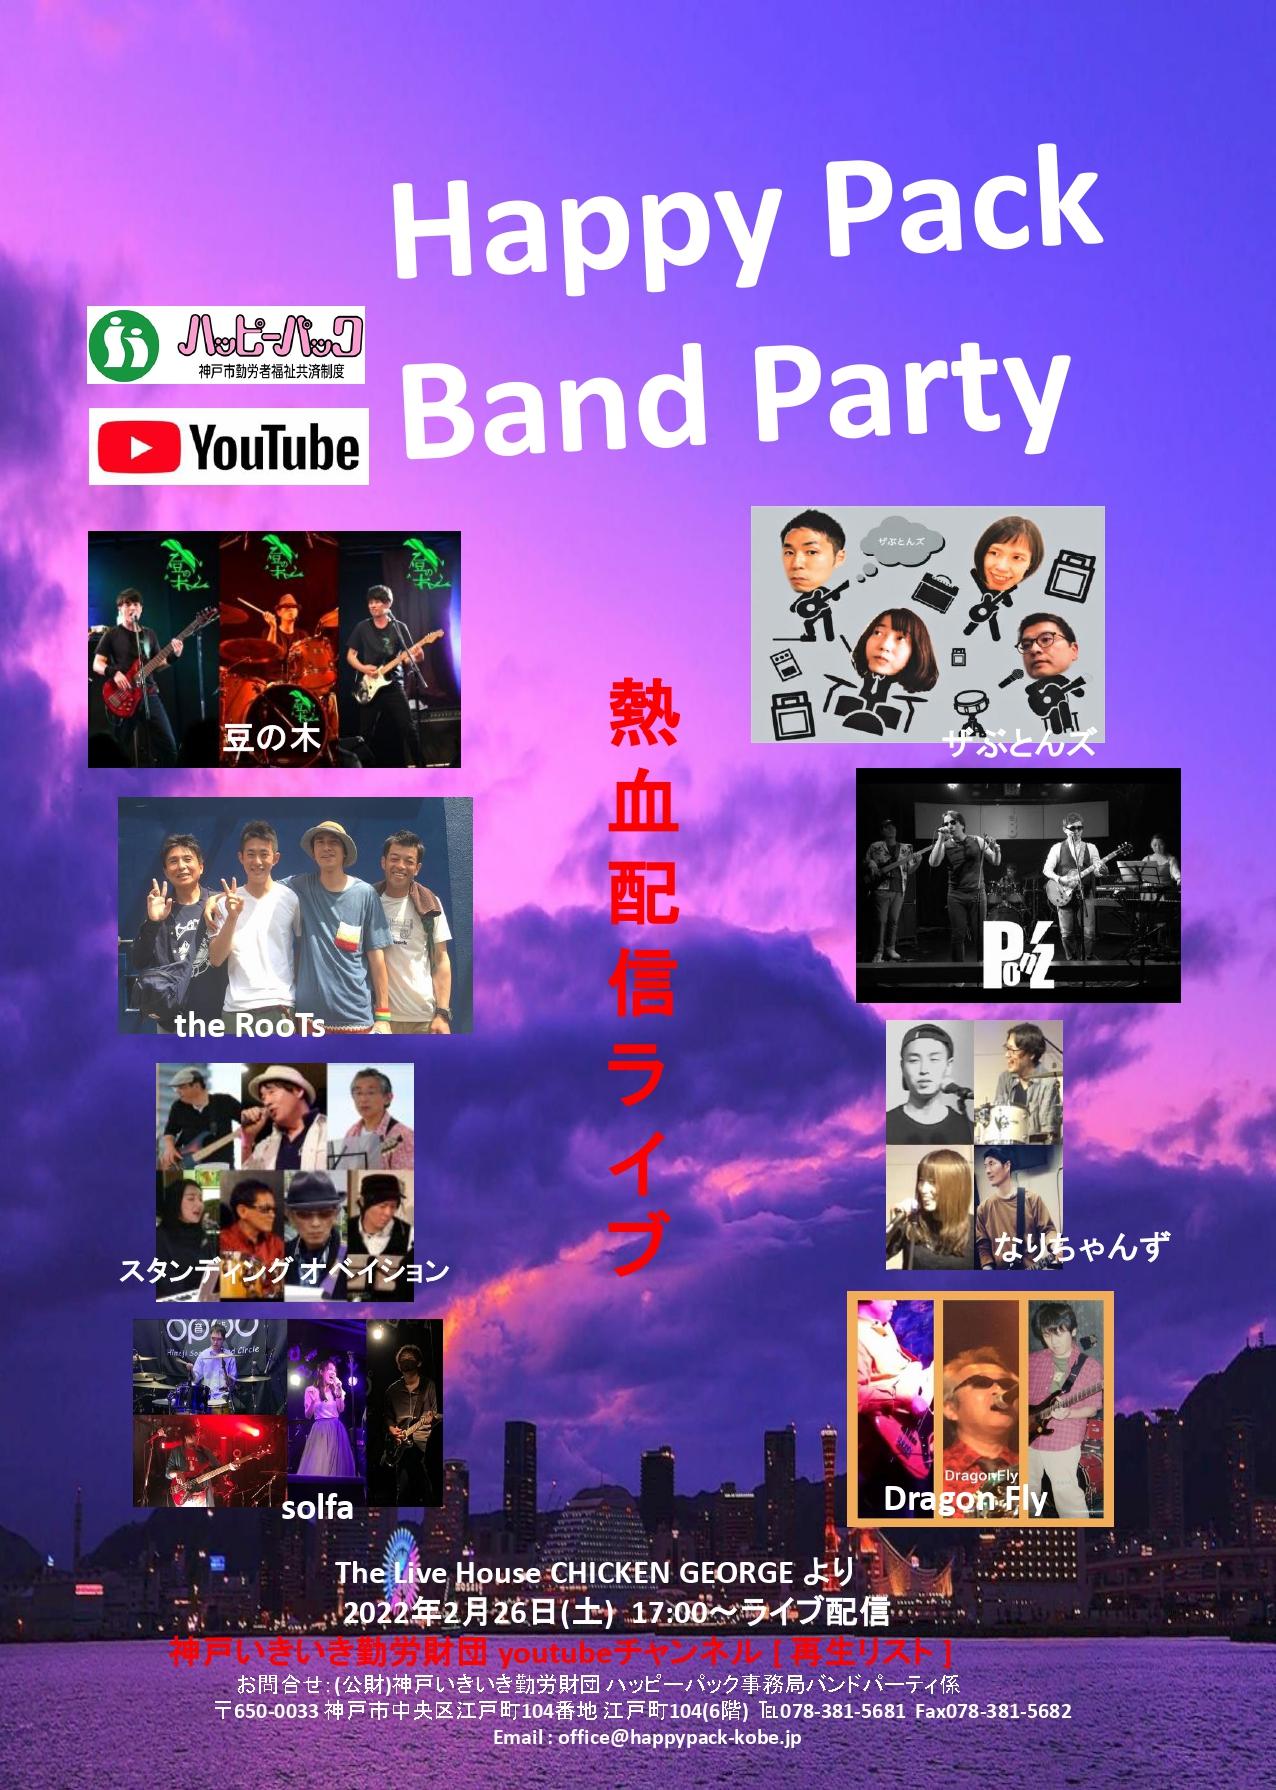 Happypack Band Party 22開催 出演バンド変更 お知らせ ハッピーパック 神戸市勤労者福祉共済制度